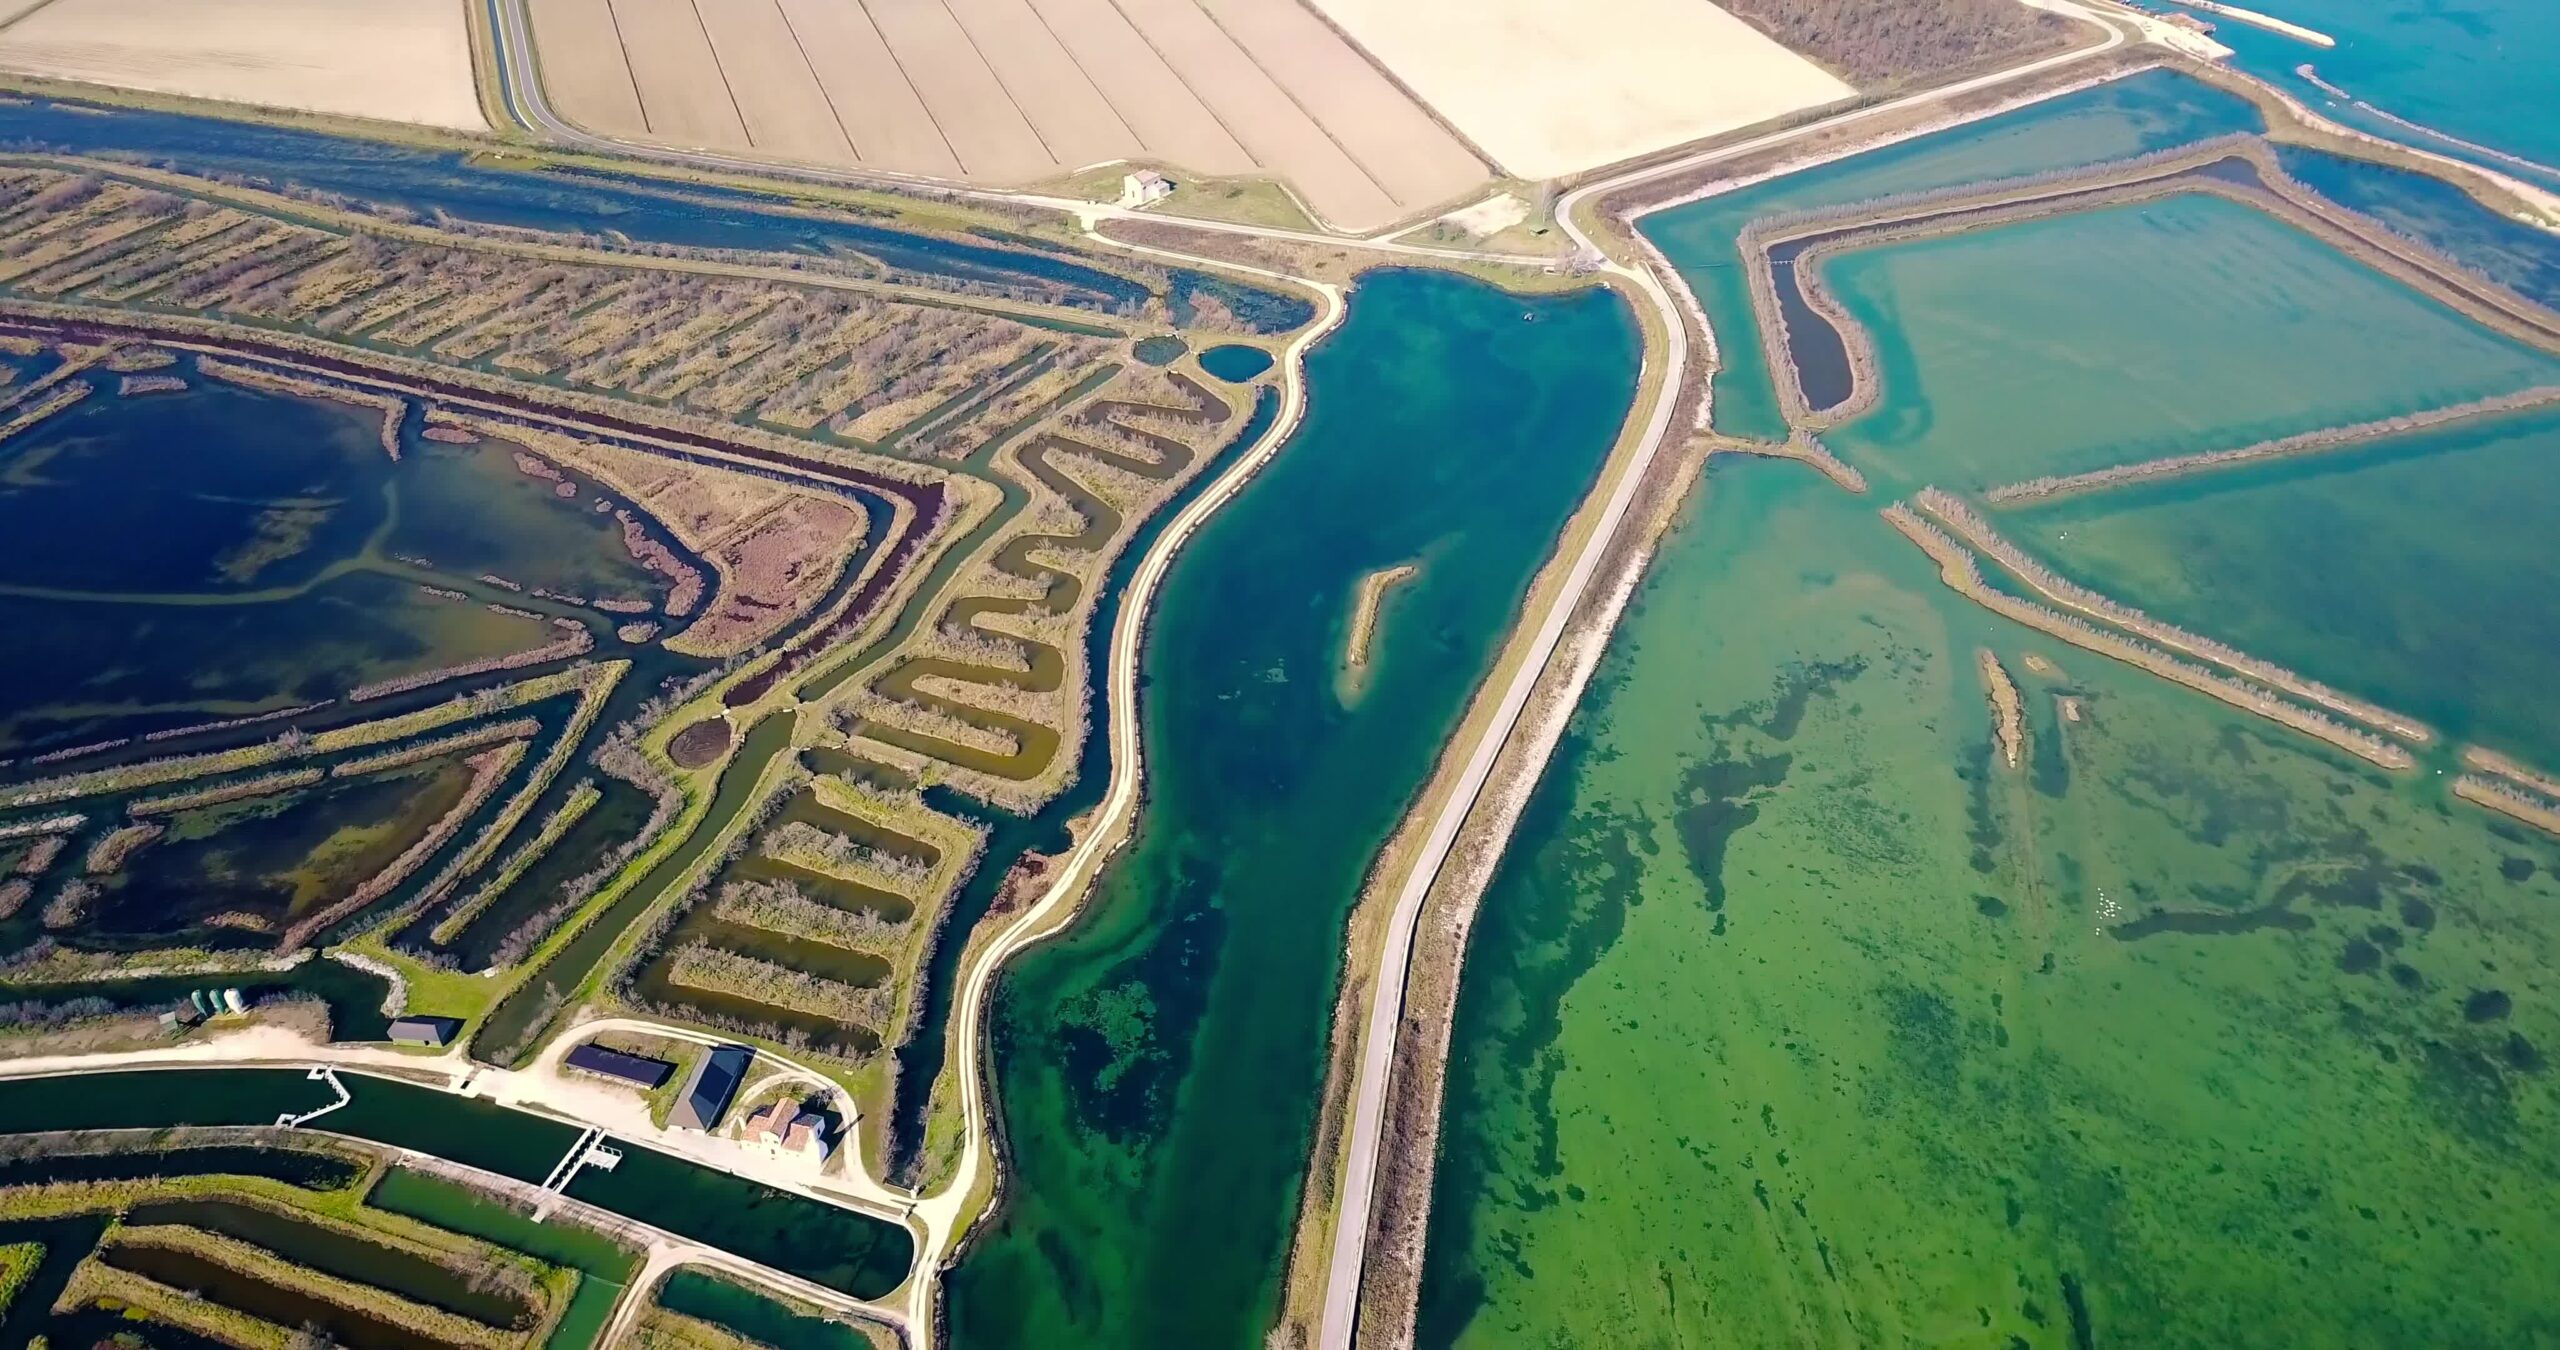 Boundless dry fields near bright turquoise Venetian lagoon